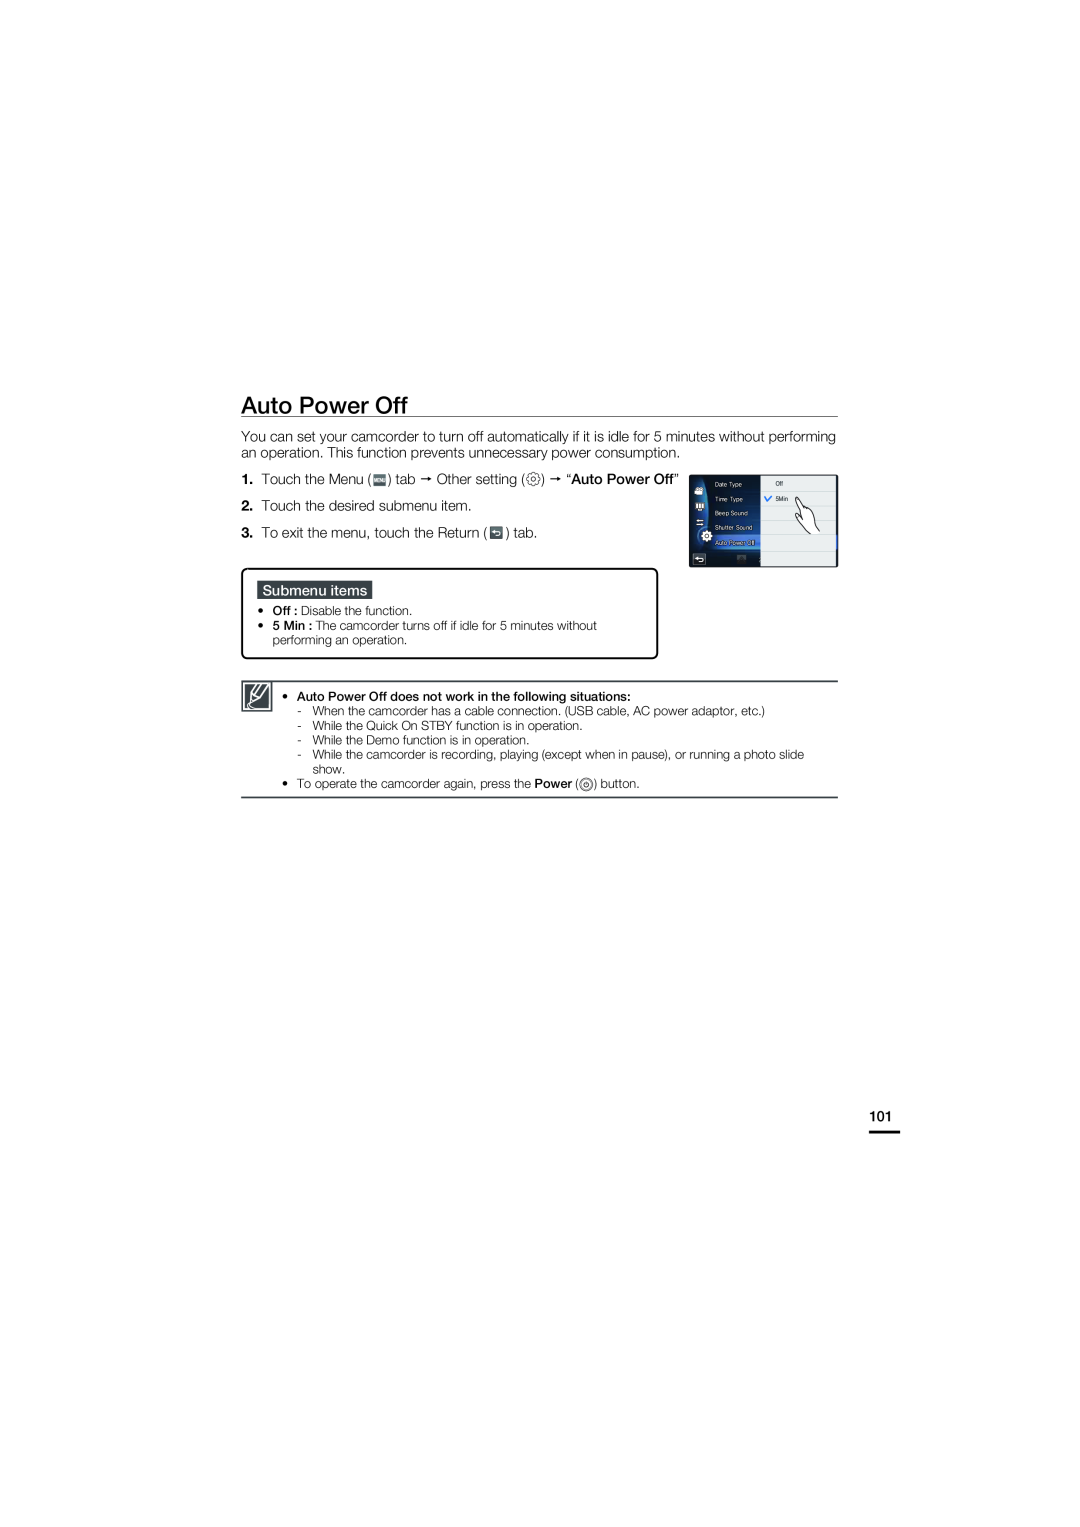 Samsung HMX-S10BN/XAA, HMX-S15BN/XAA manual Submenu items, Touch the Menu tab Other setting “Auto Power Off” 